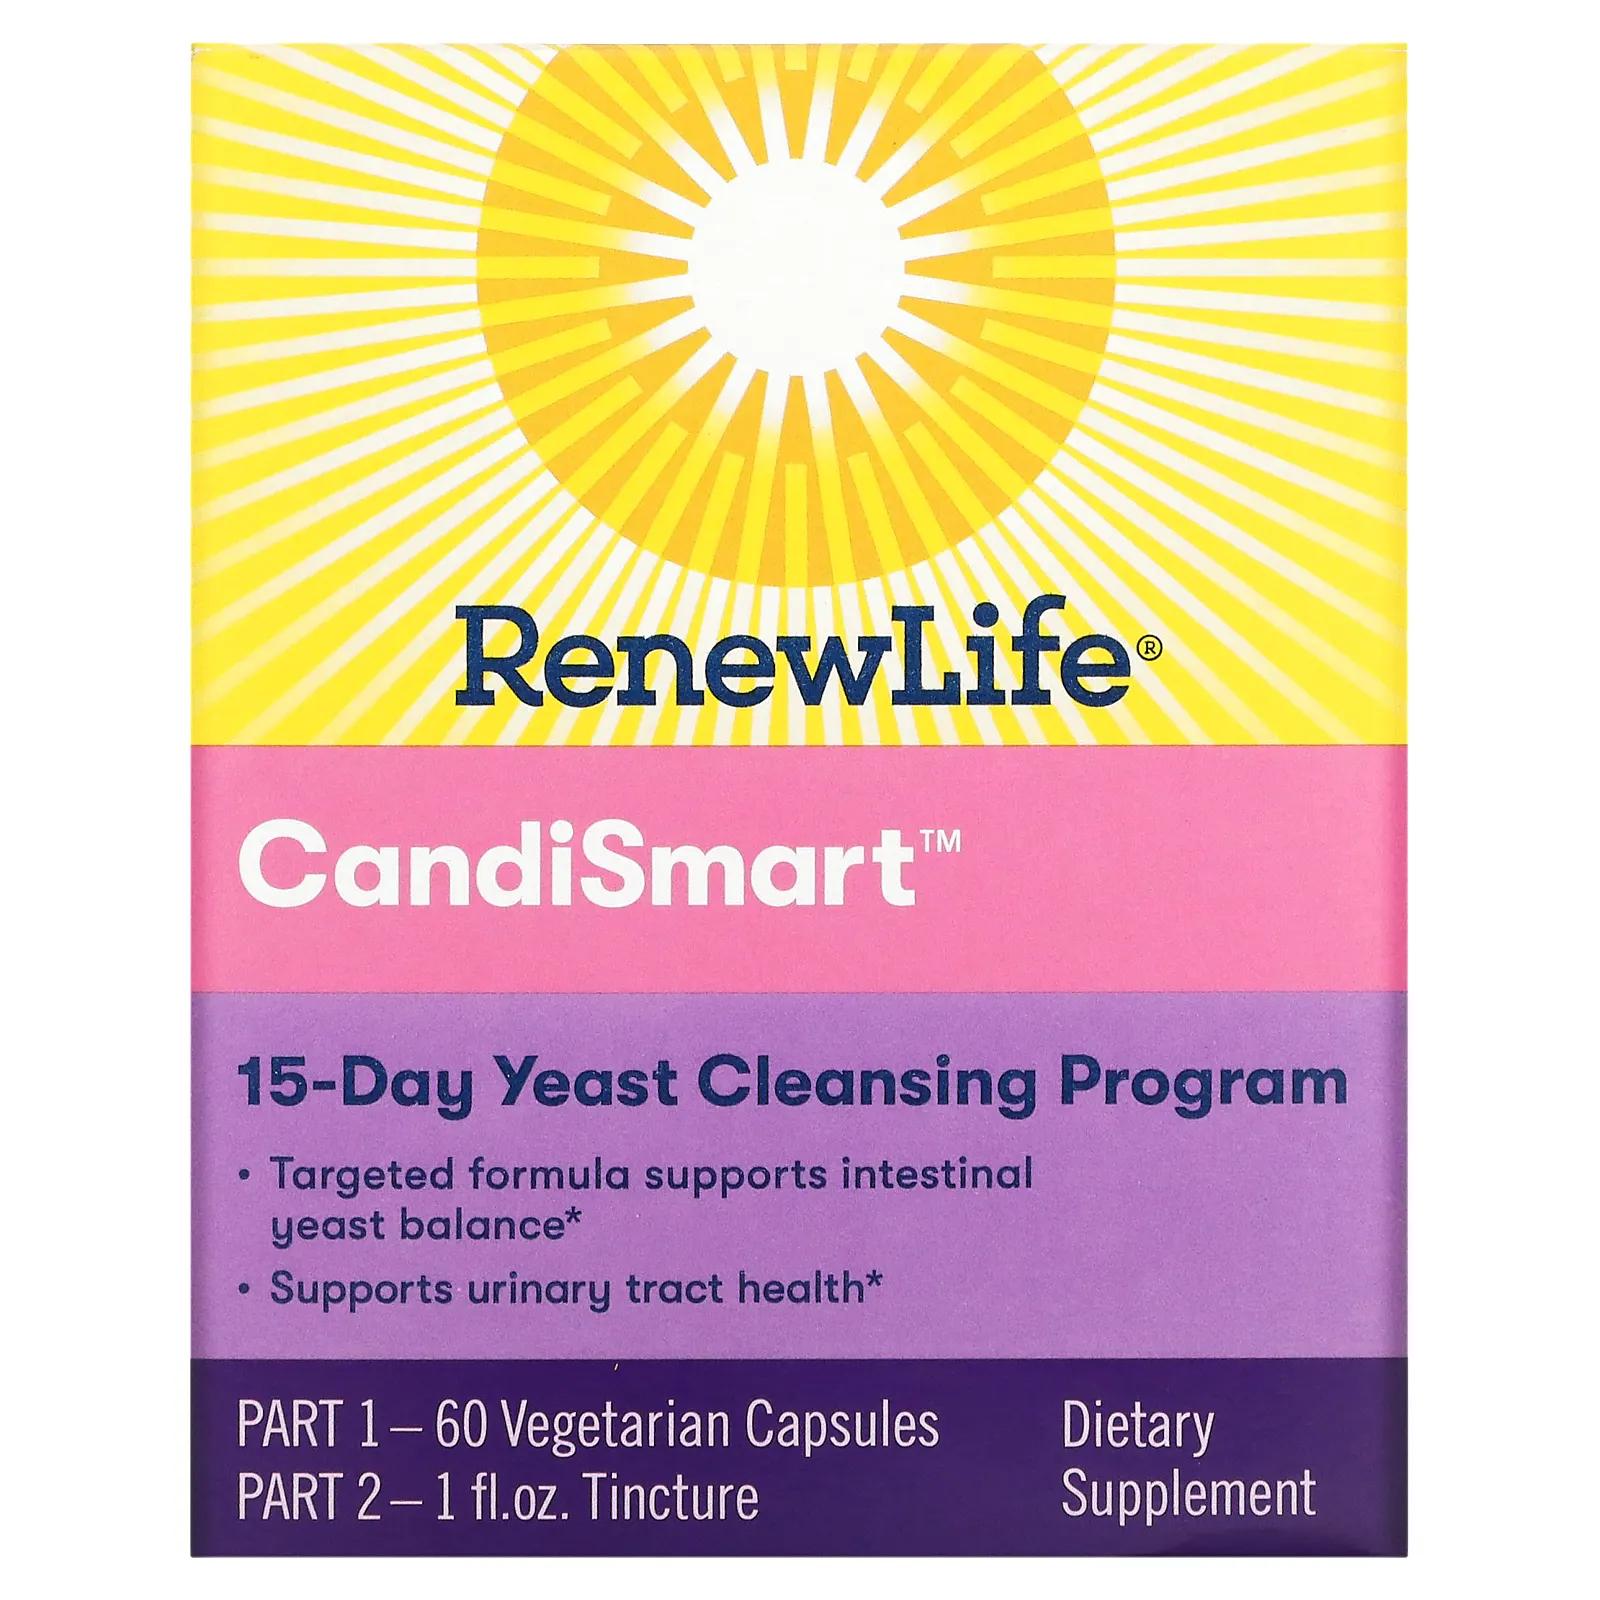 Renew Life Целевая Candi Smart очищающая дрожжевая формула 15-дневная программа 2-компонентная программа renew life women s wellness vaginal